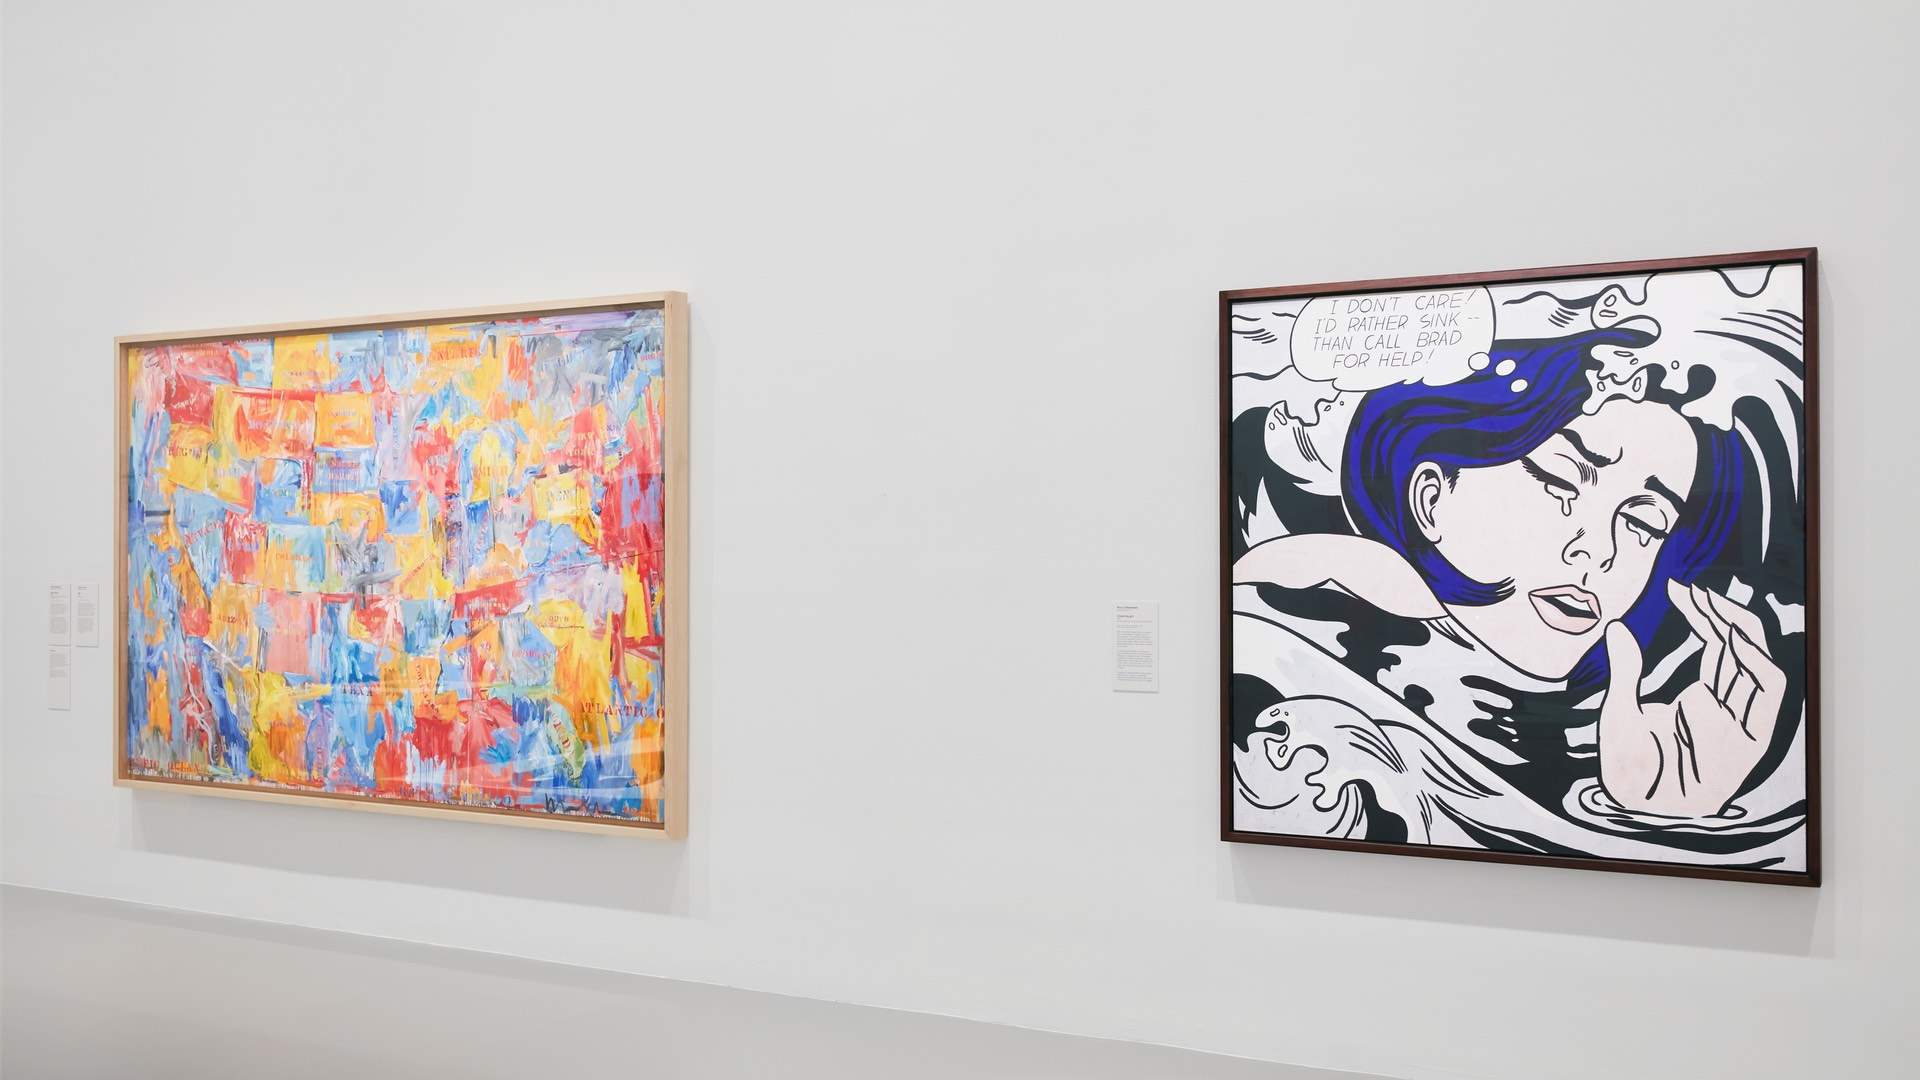 MoMA at NGV: 130 Years of Modern and Contemporary Art